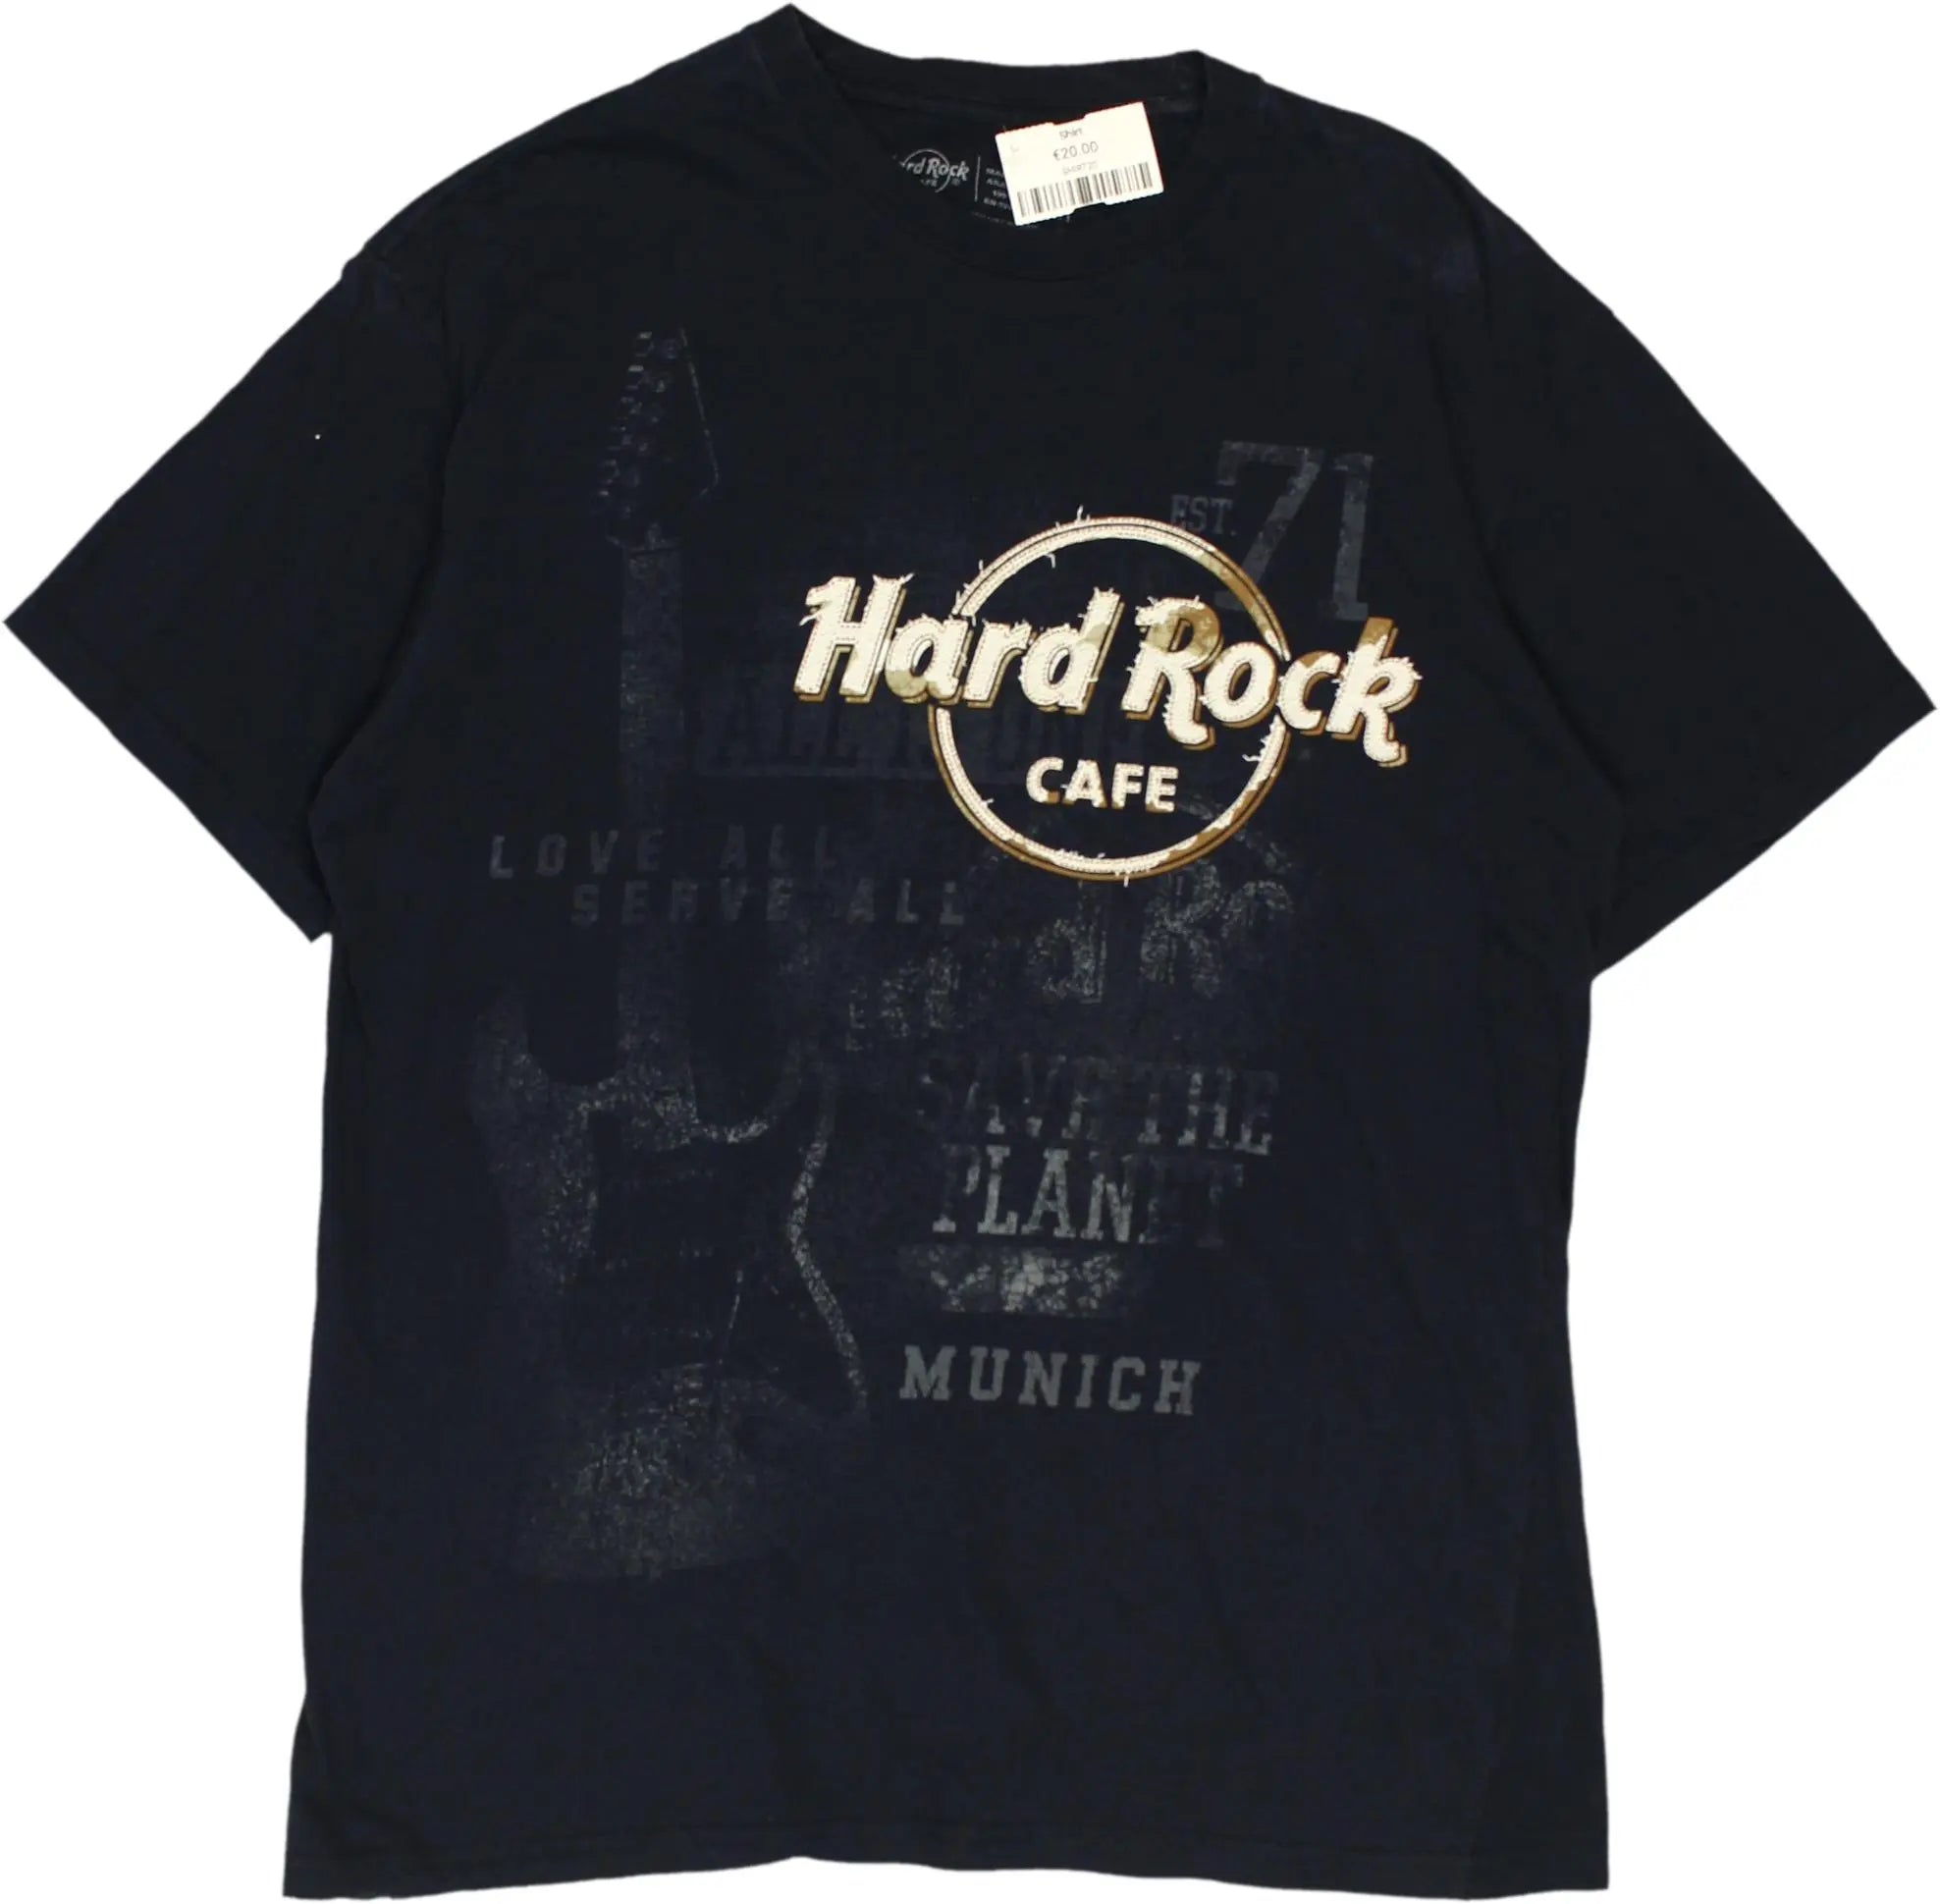 Hard Rock Cafe - Hard Rock Cafe T-shirt- ThriftTale.com - Vintage and second handclothing